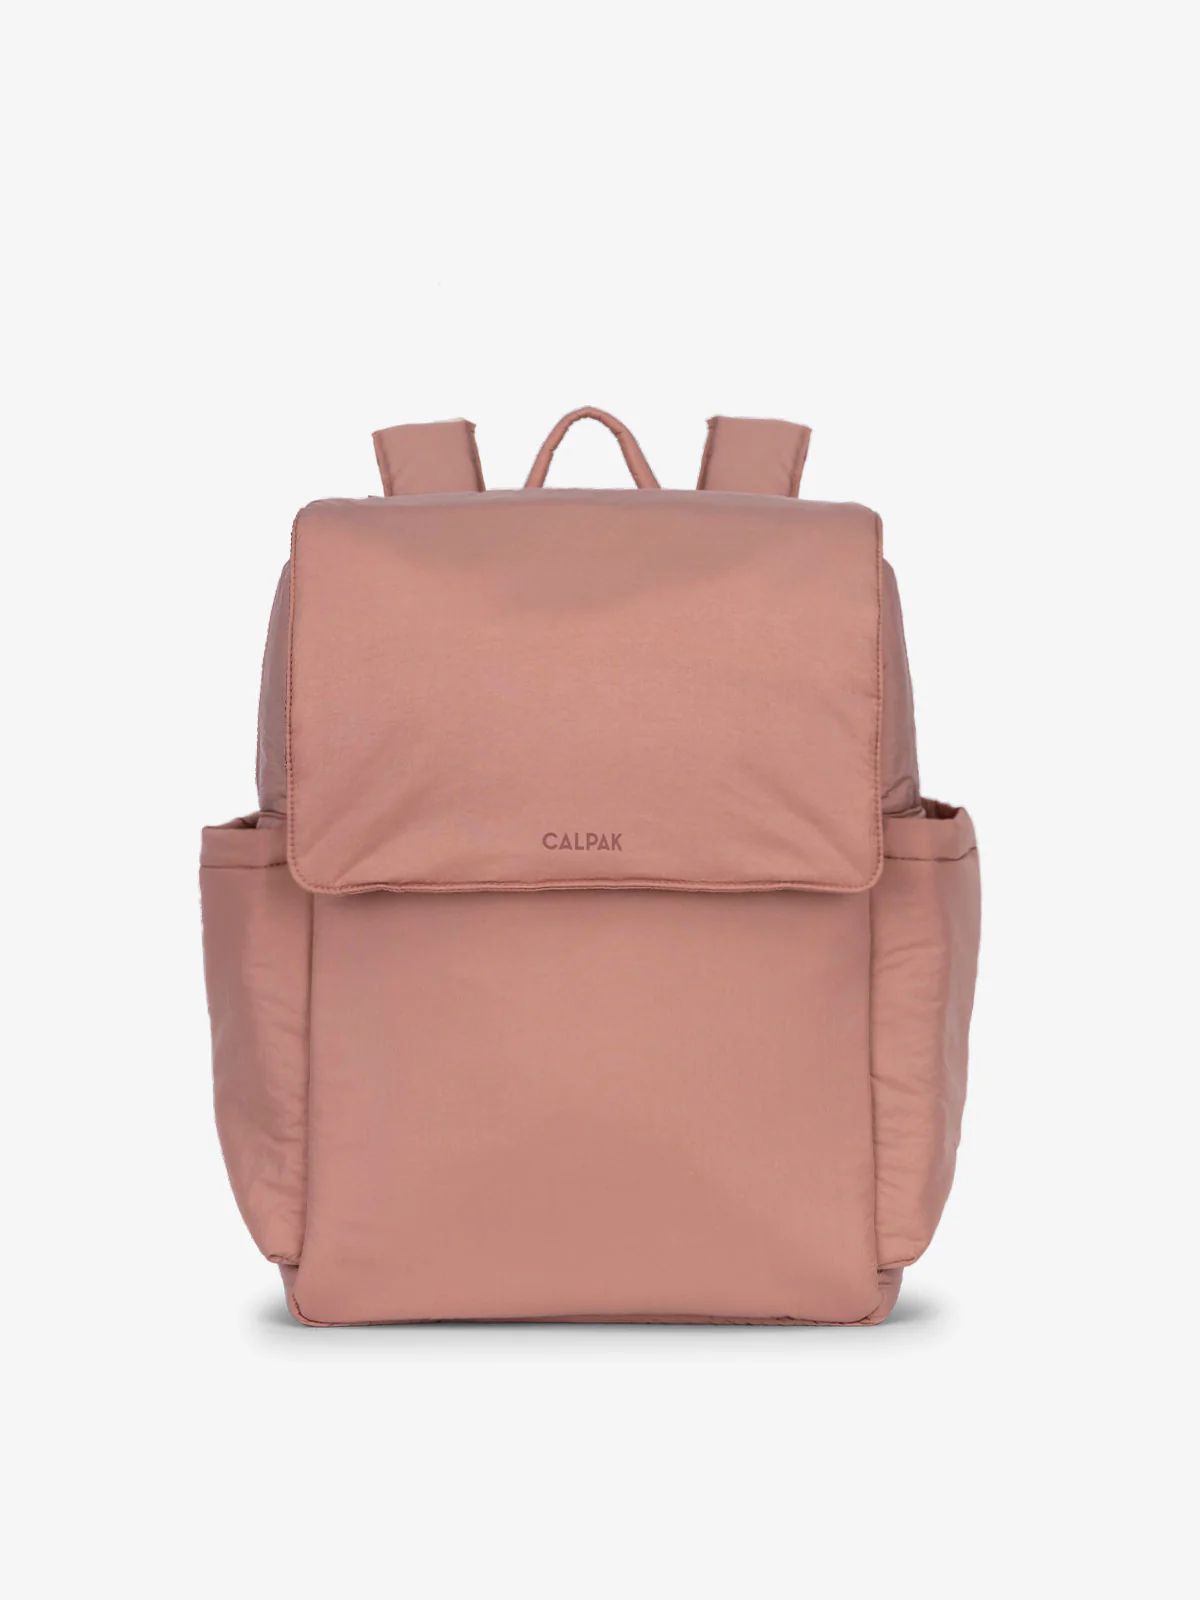 Diaper Backpack with Laptop Sleeve | CALPAK Travel